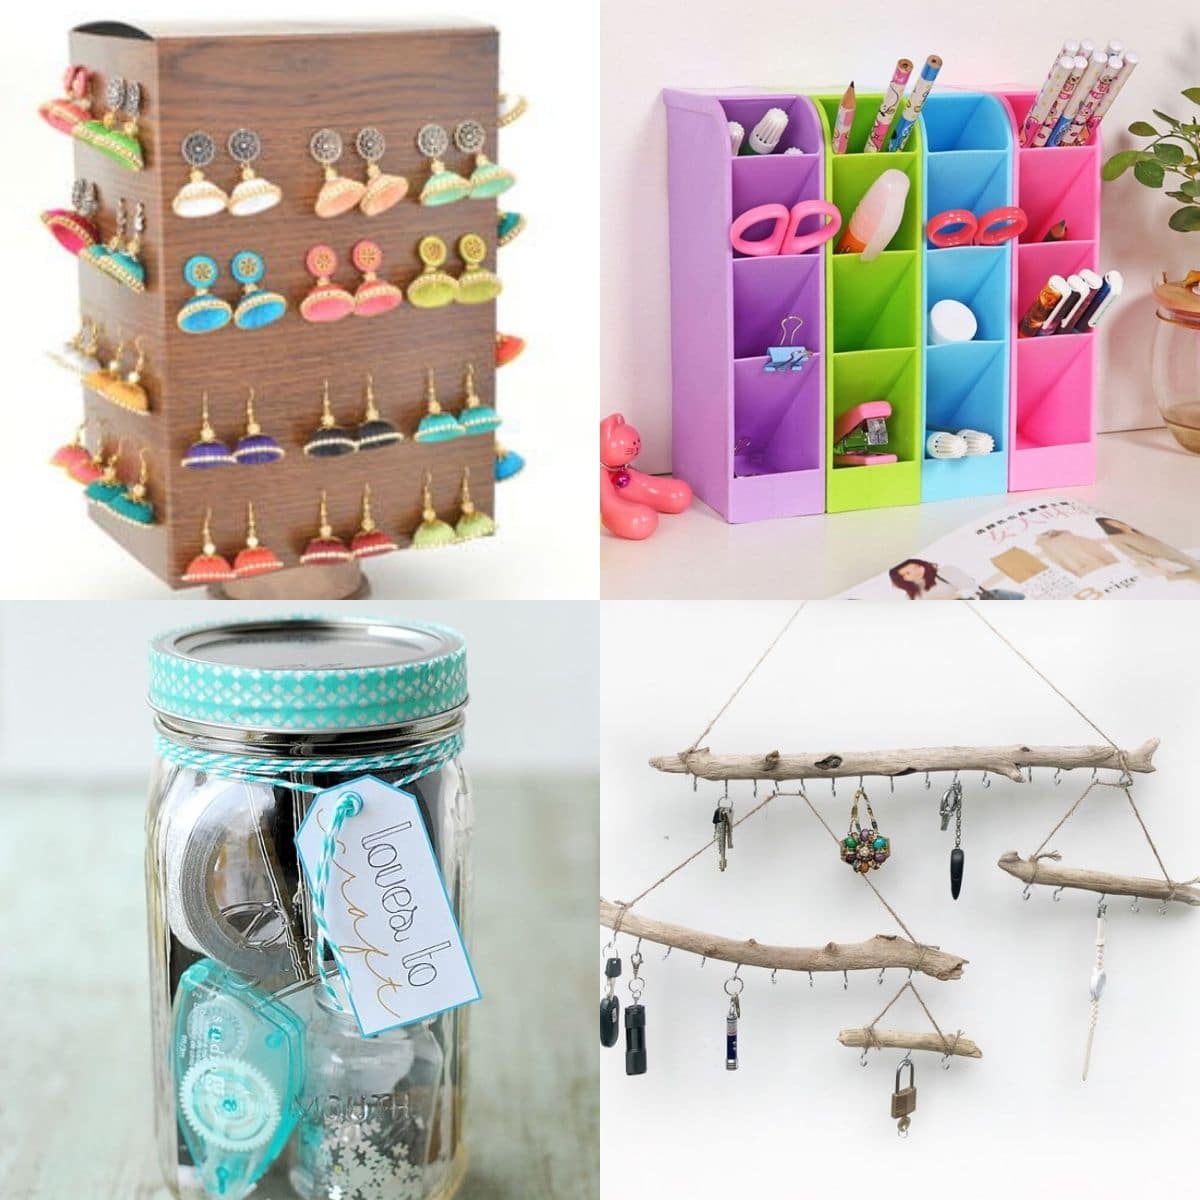 https://craftsyhacks.com/wp-content/uploads/2019/07/15-Creative-Ways-to-Organize-Small-Items.jpg